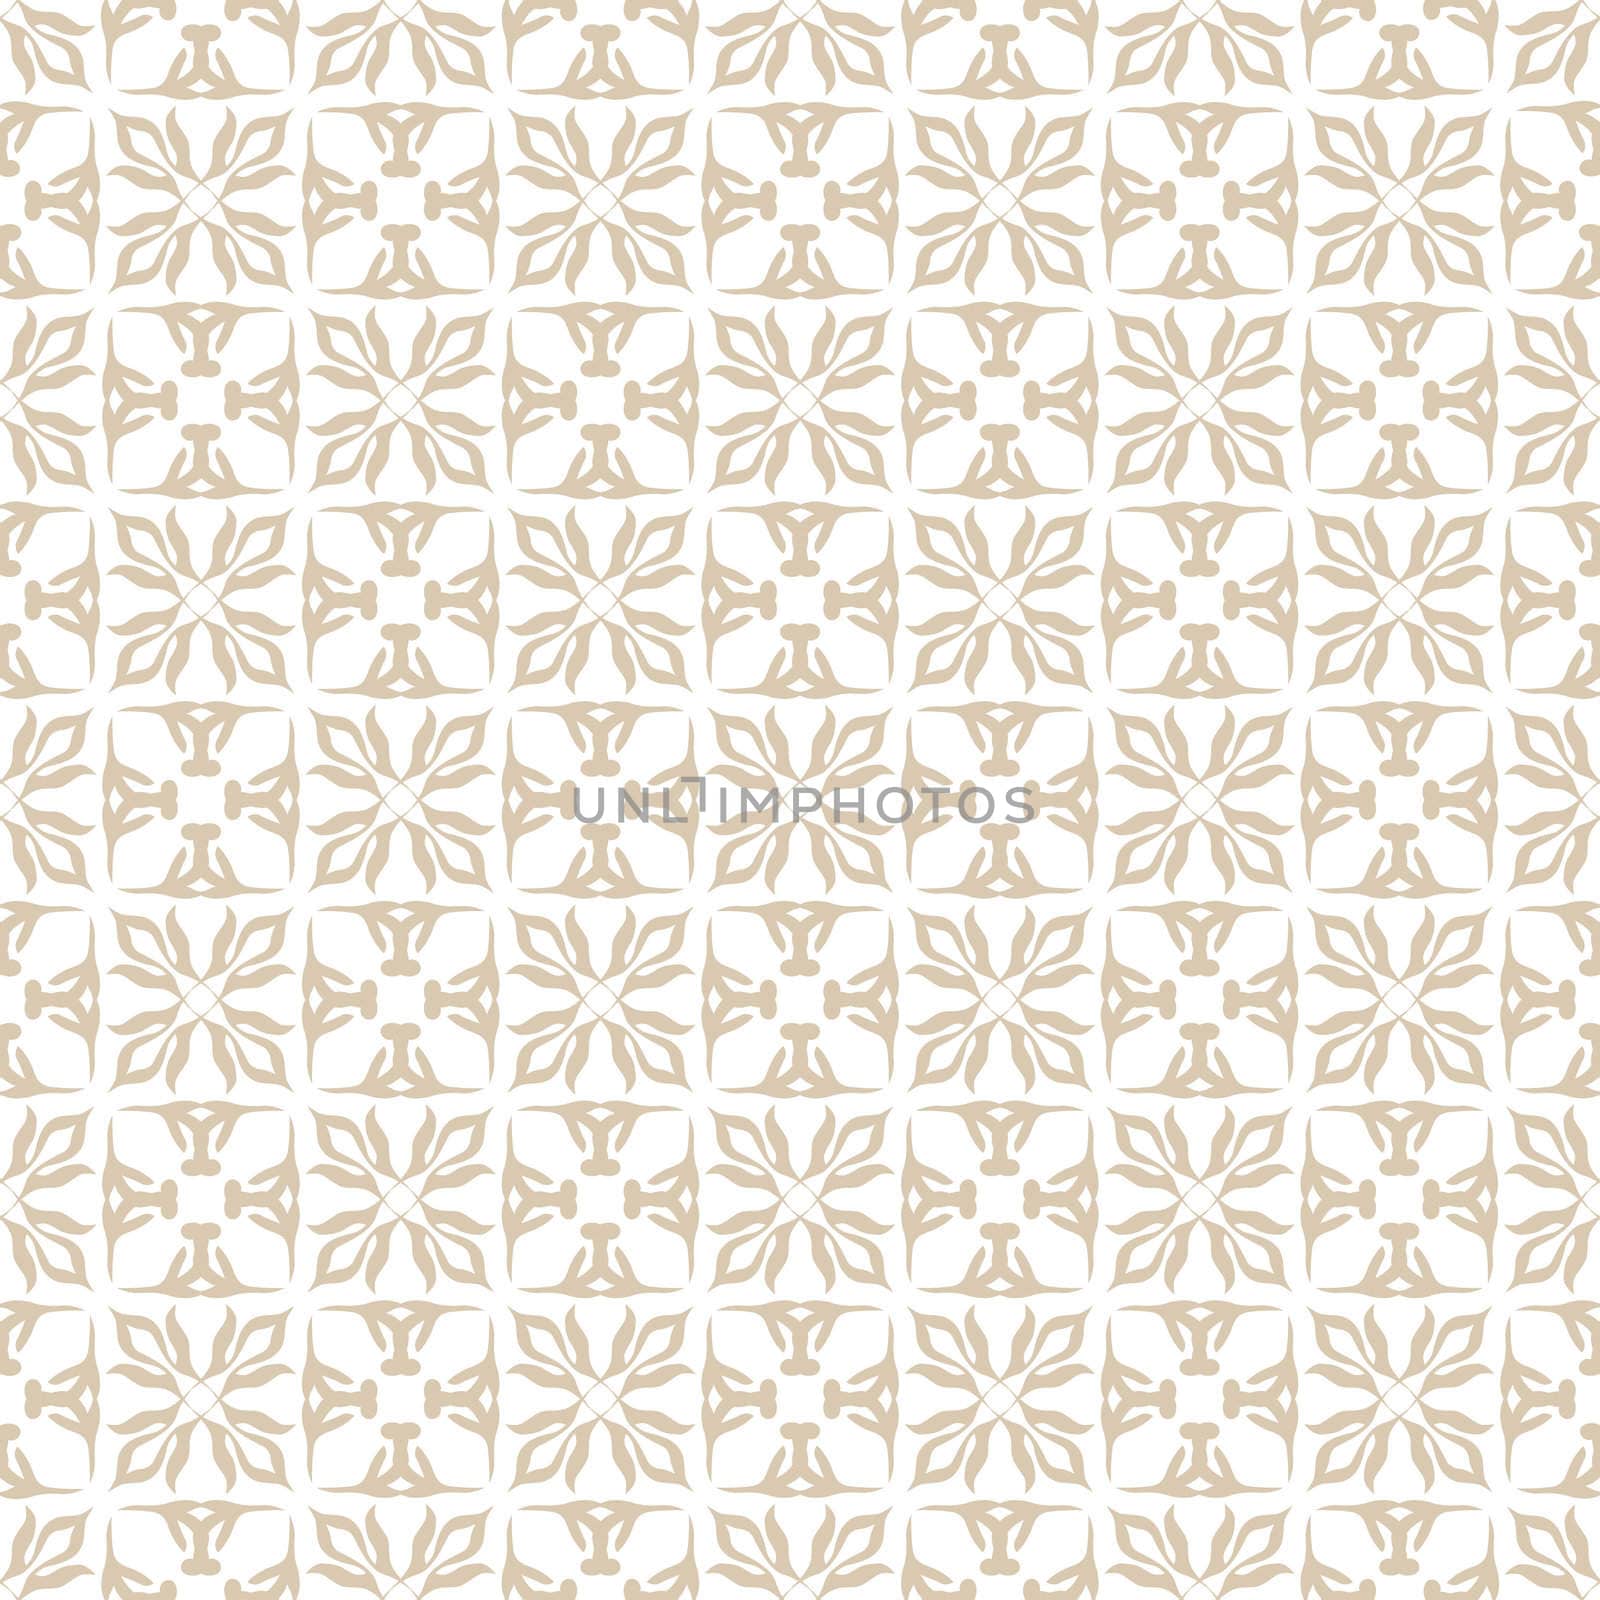 Modern classic style background seamless wallpaper design pattern